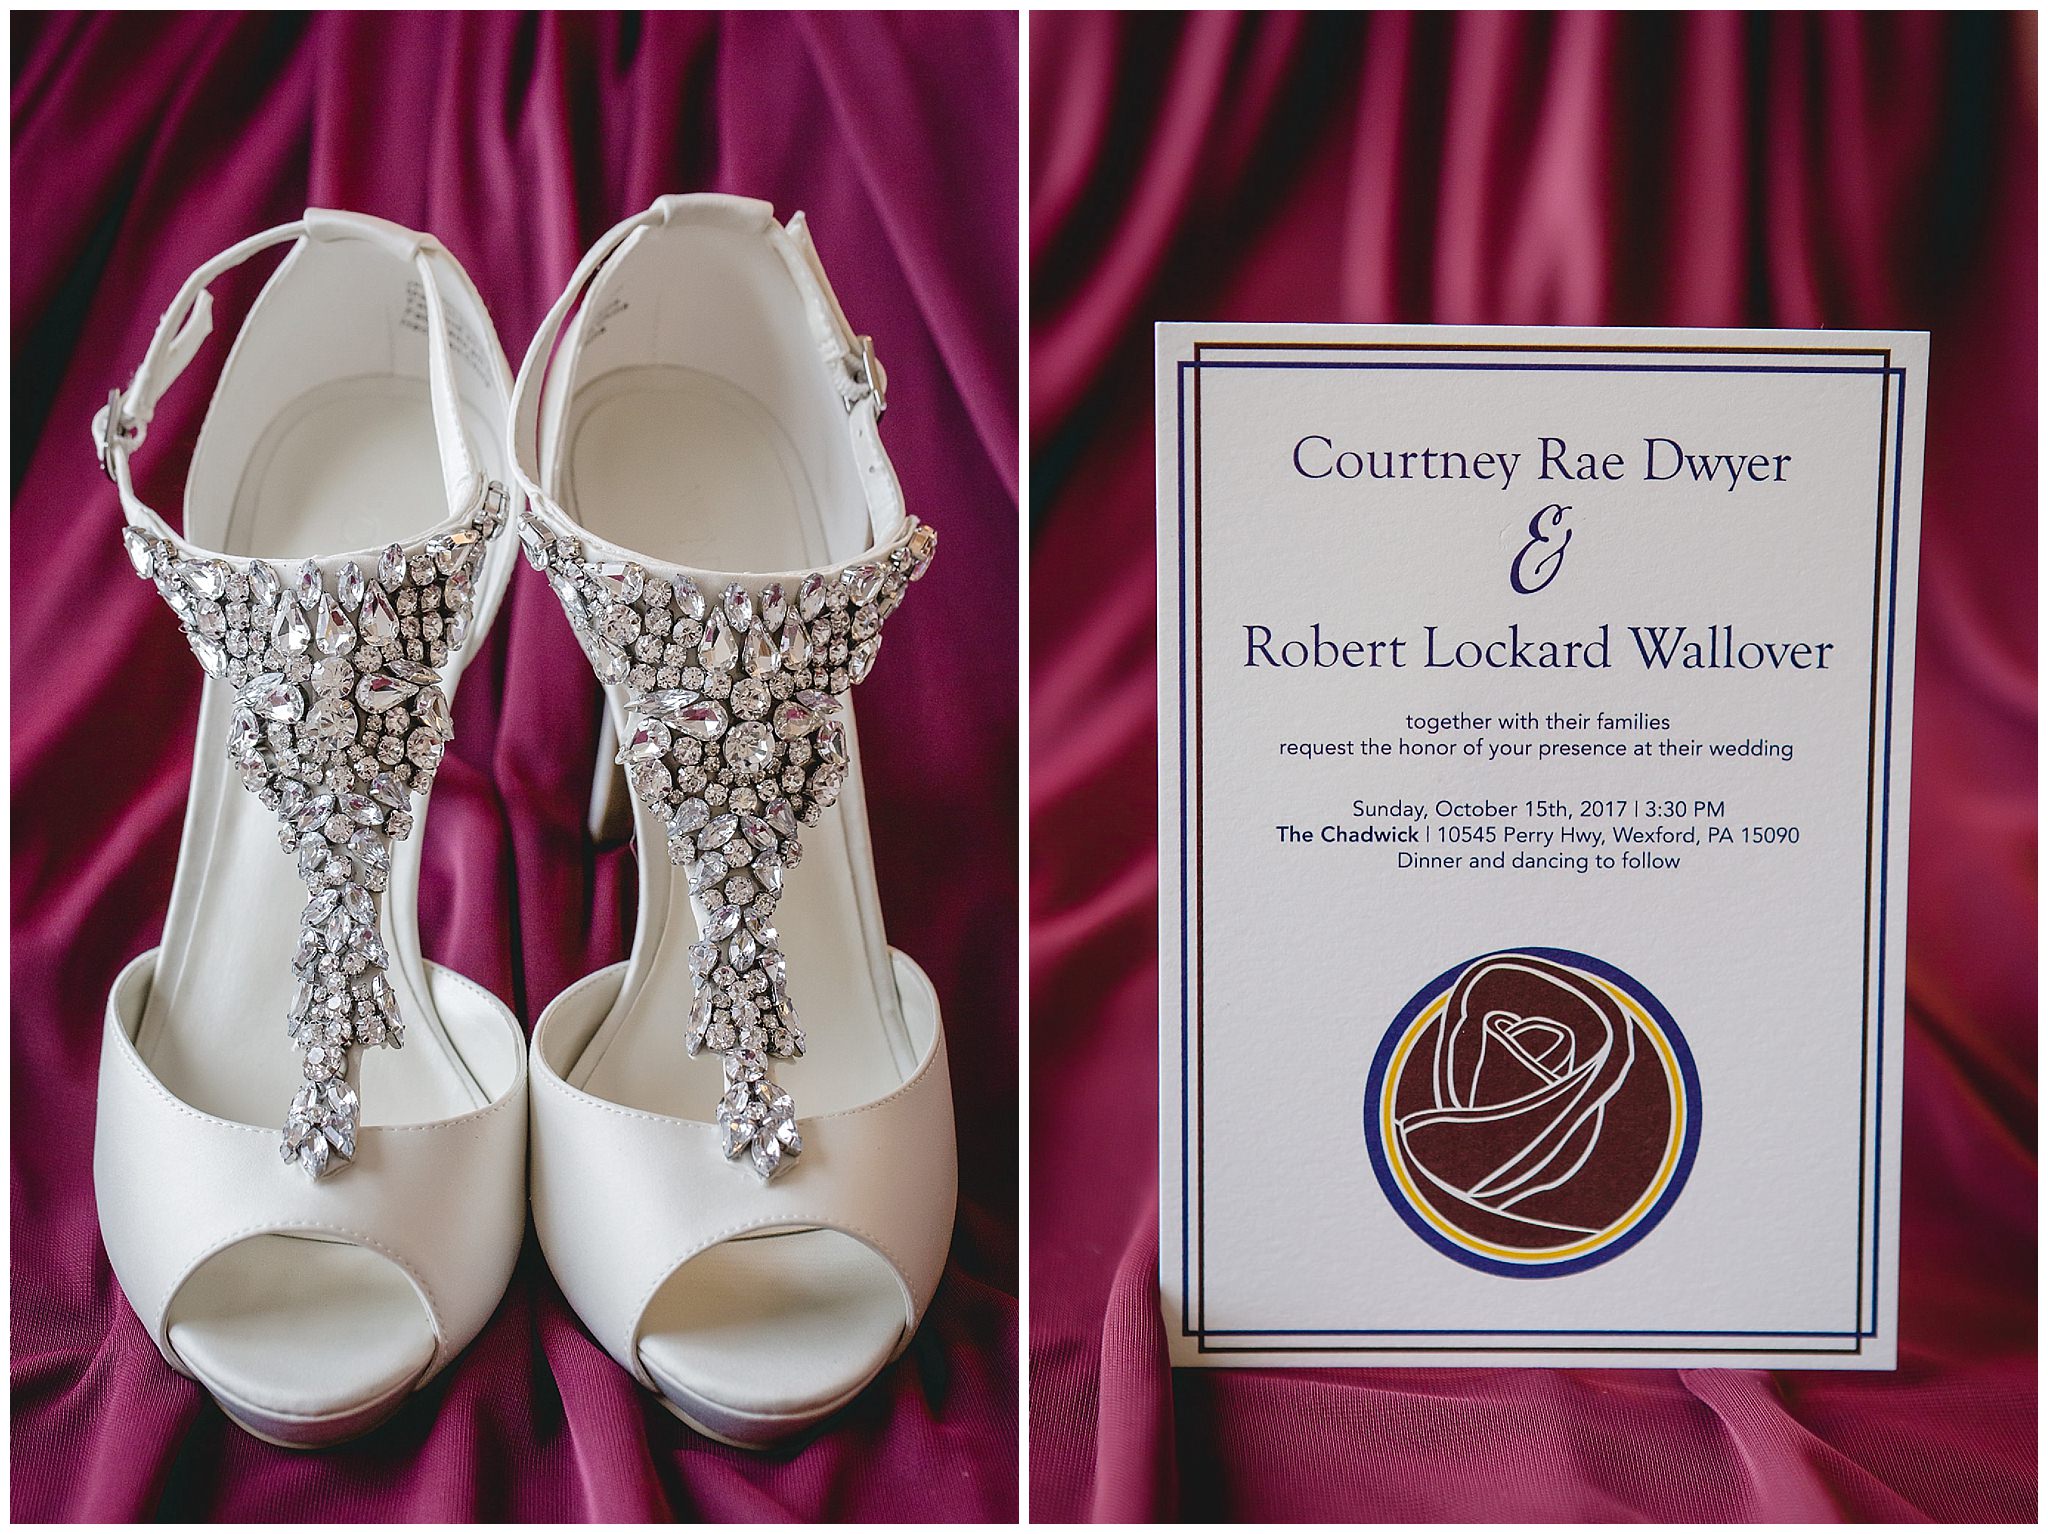 Bride's shoes and custom designed wedding invitation